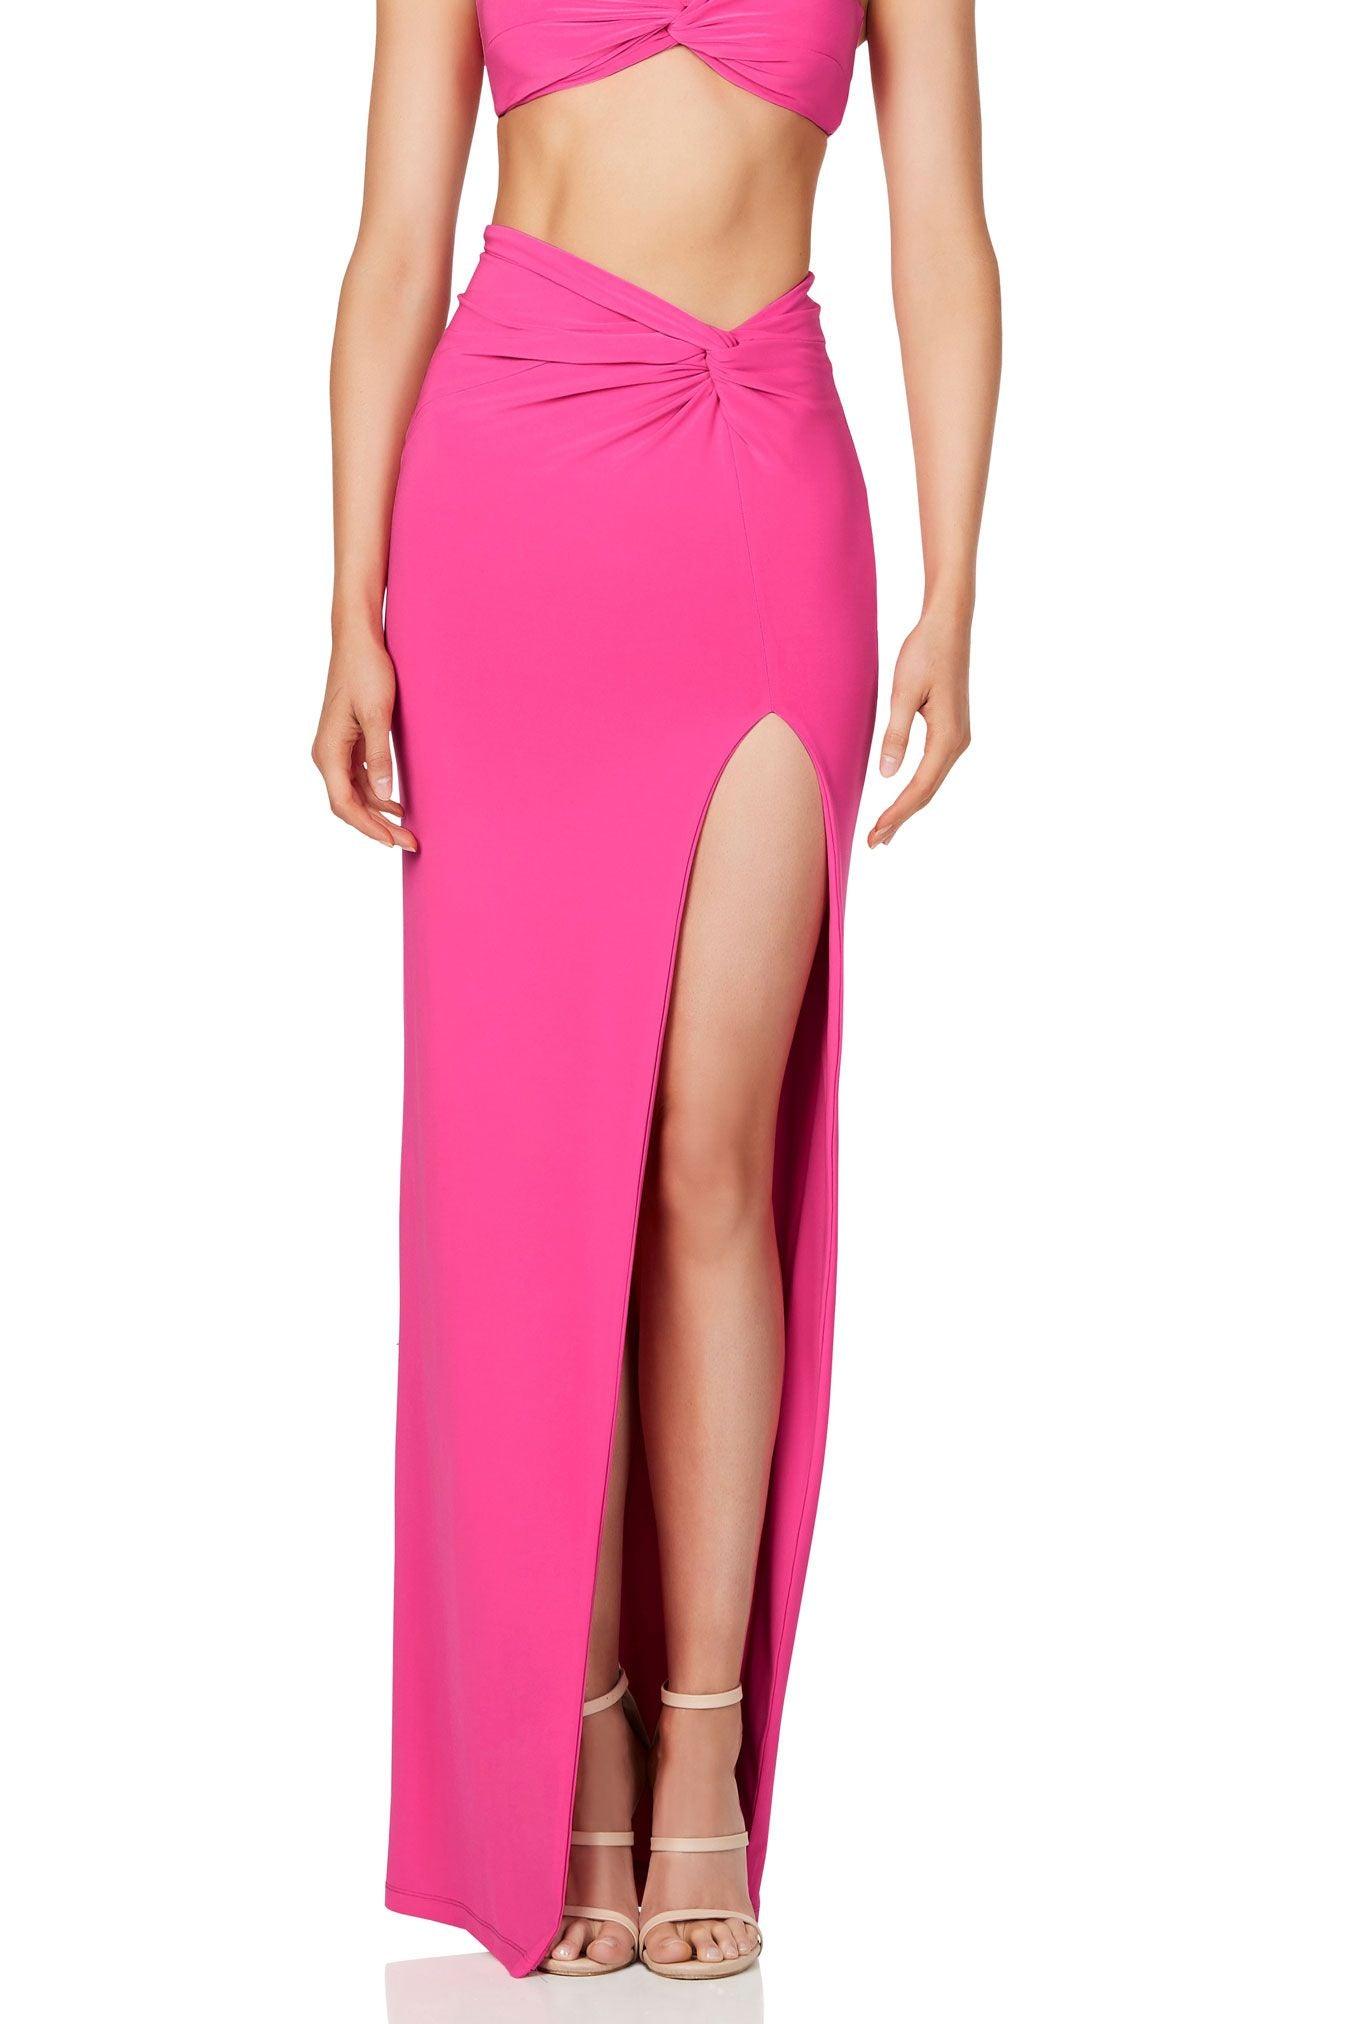 Nookie Jewel Skirt - Neon Pink - JAUS